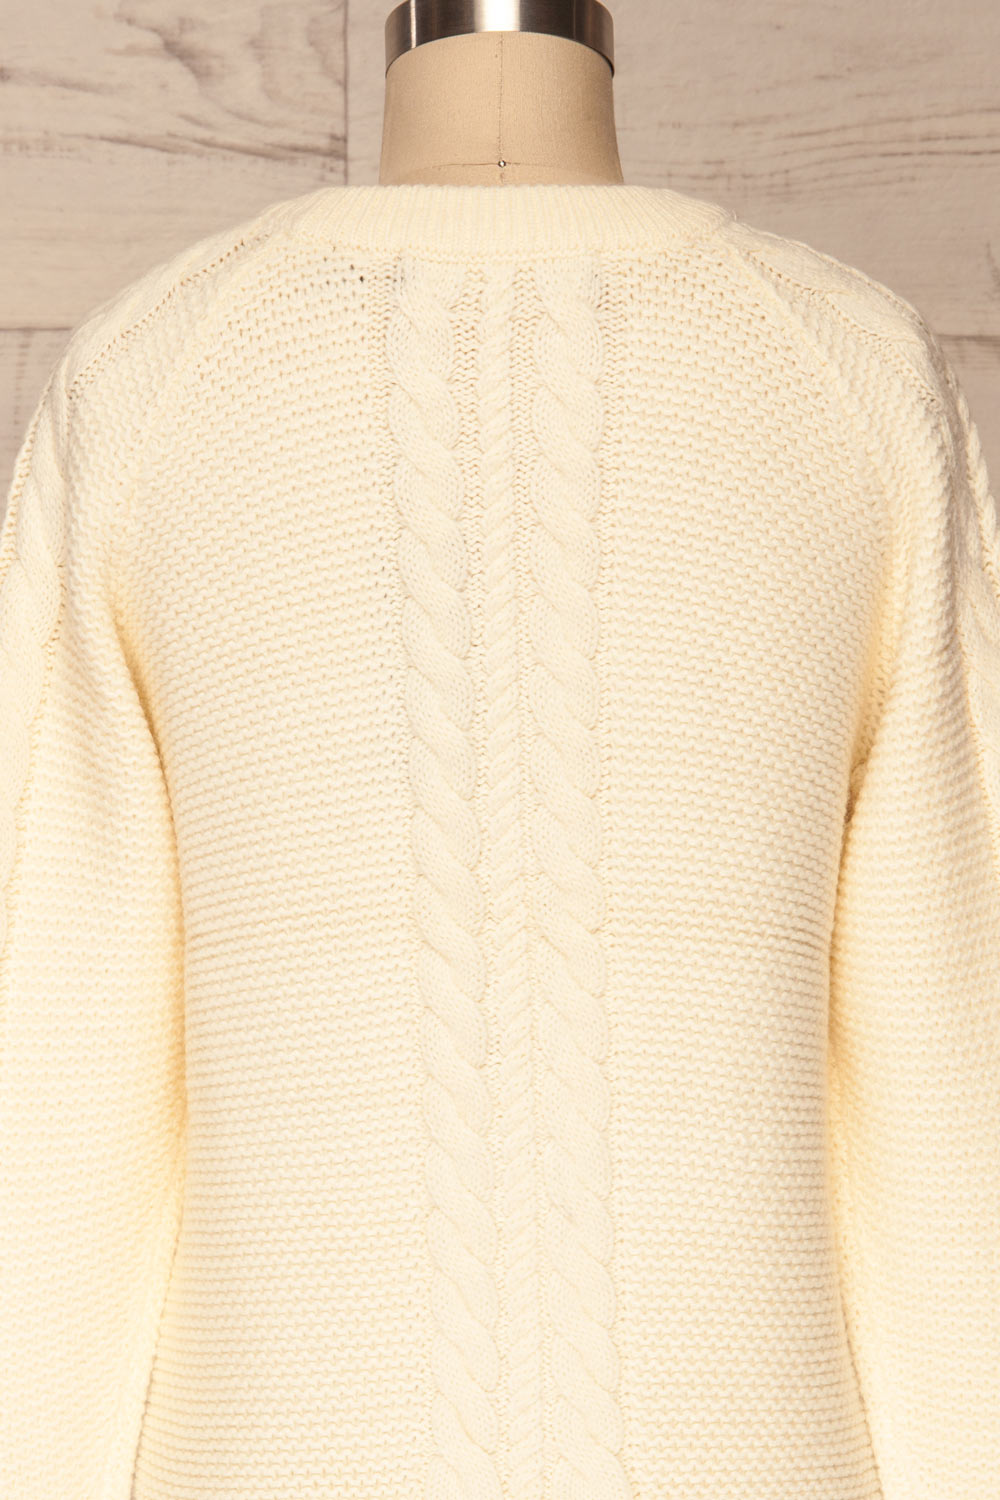 Imielin Ivory Knit Sweater back close up | La Petite Garçonne